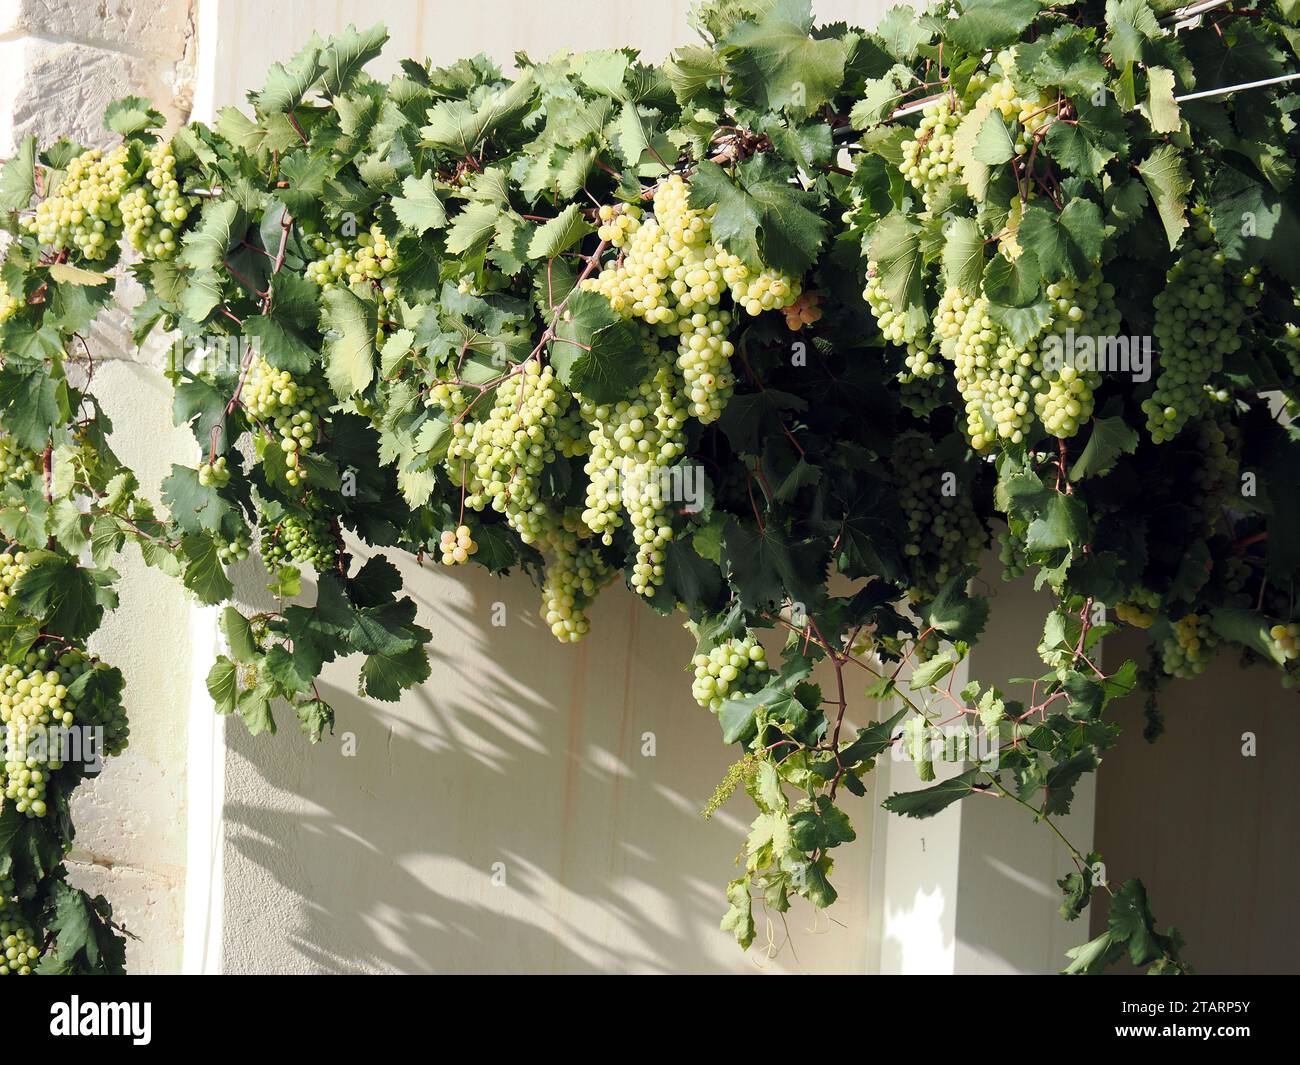 common grape vine, Weinrebe, Vigne, Vitis vinifera, bortermő szőlő, Sicily, Sicilia, Italy, Europe Stock Photo